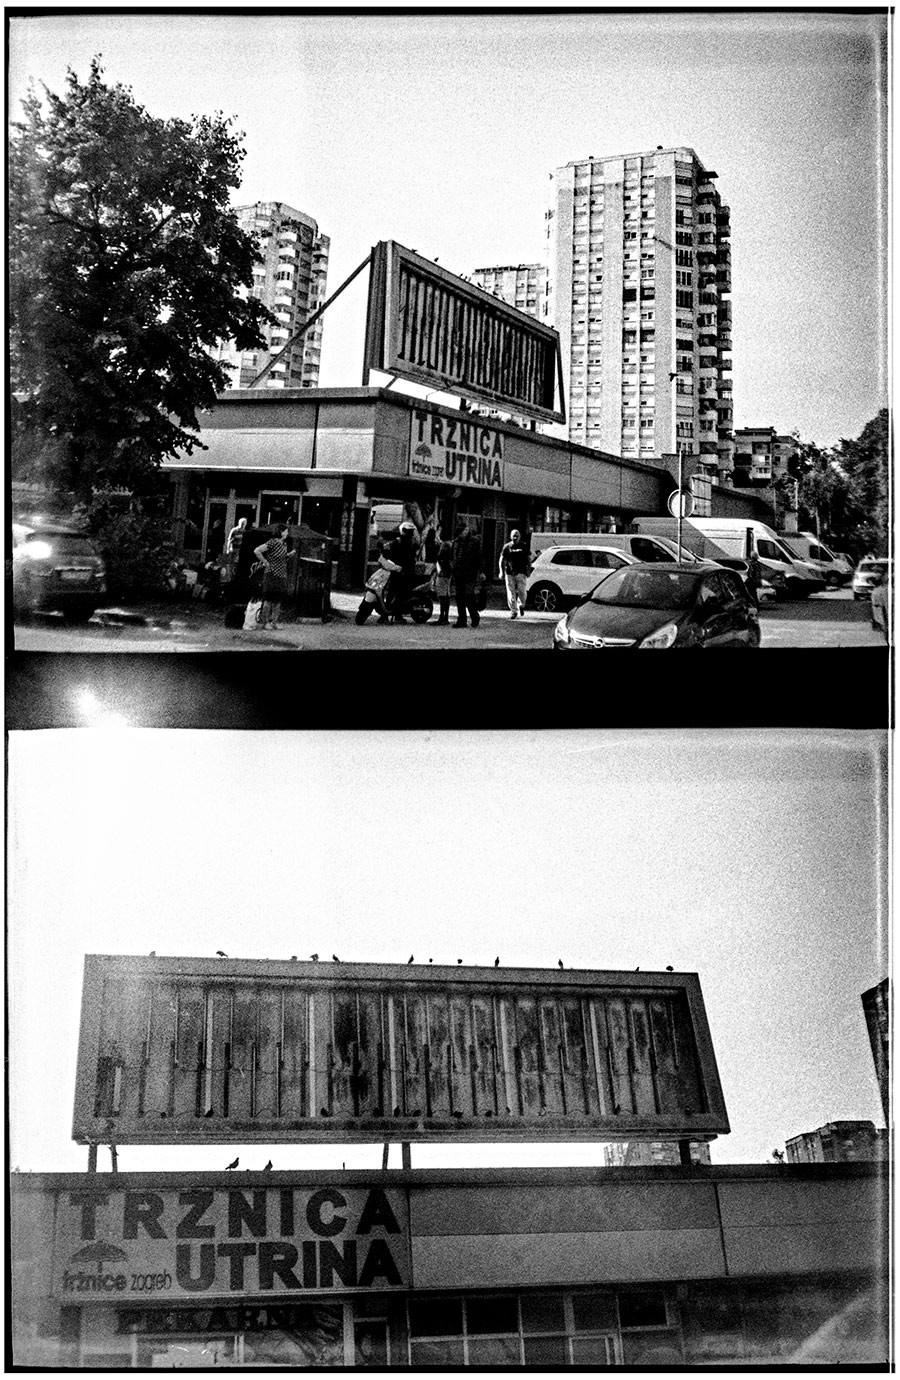 zagreb-brutalismus7-analogefotografie-antjekroeger